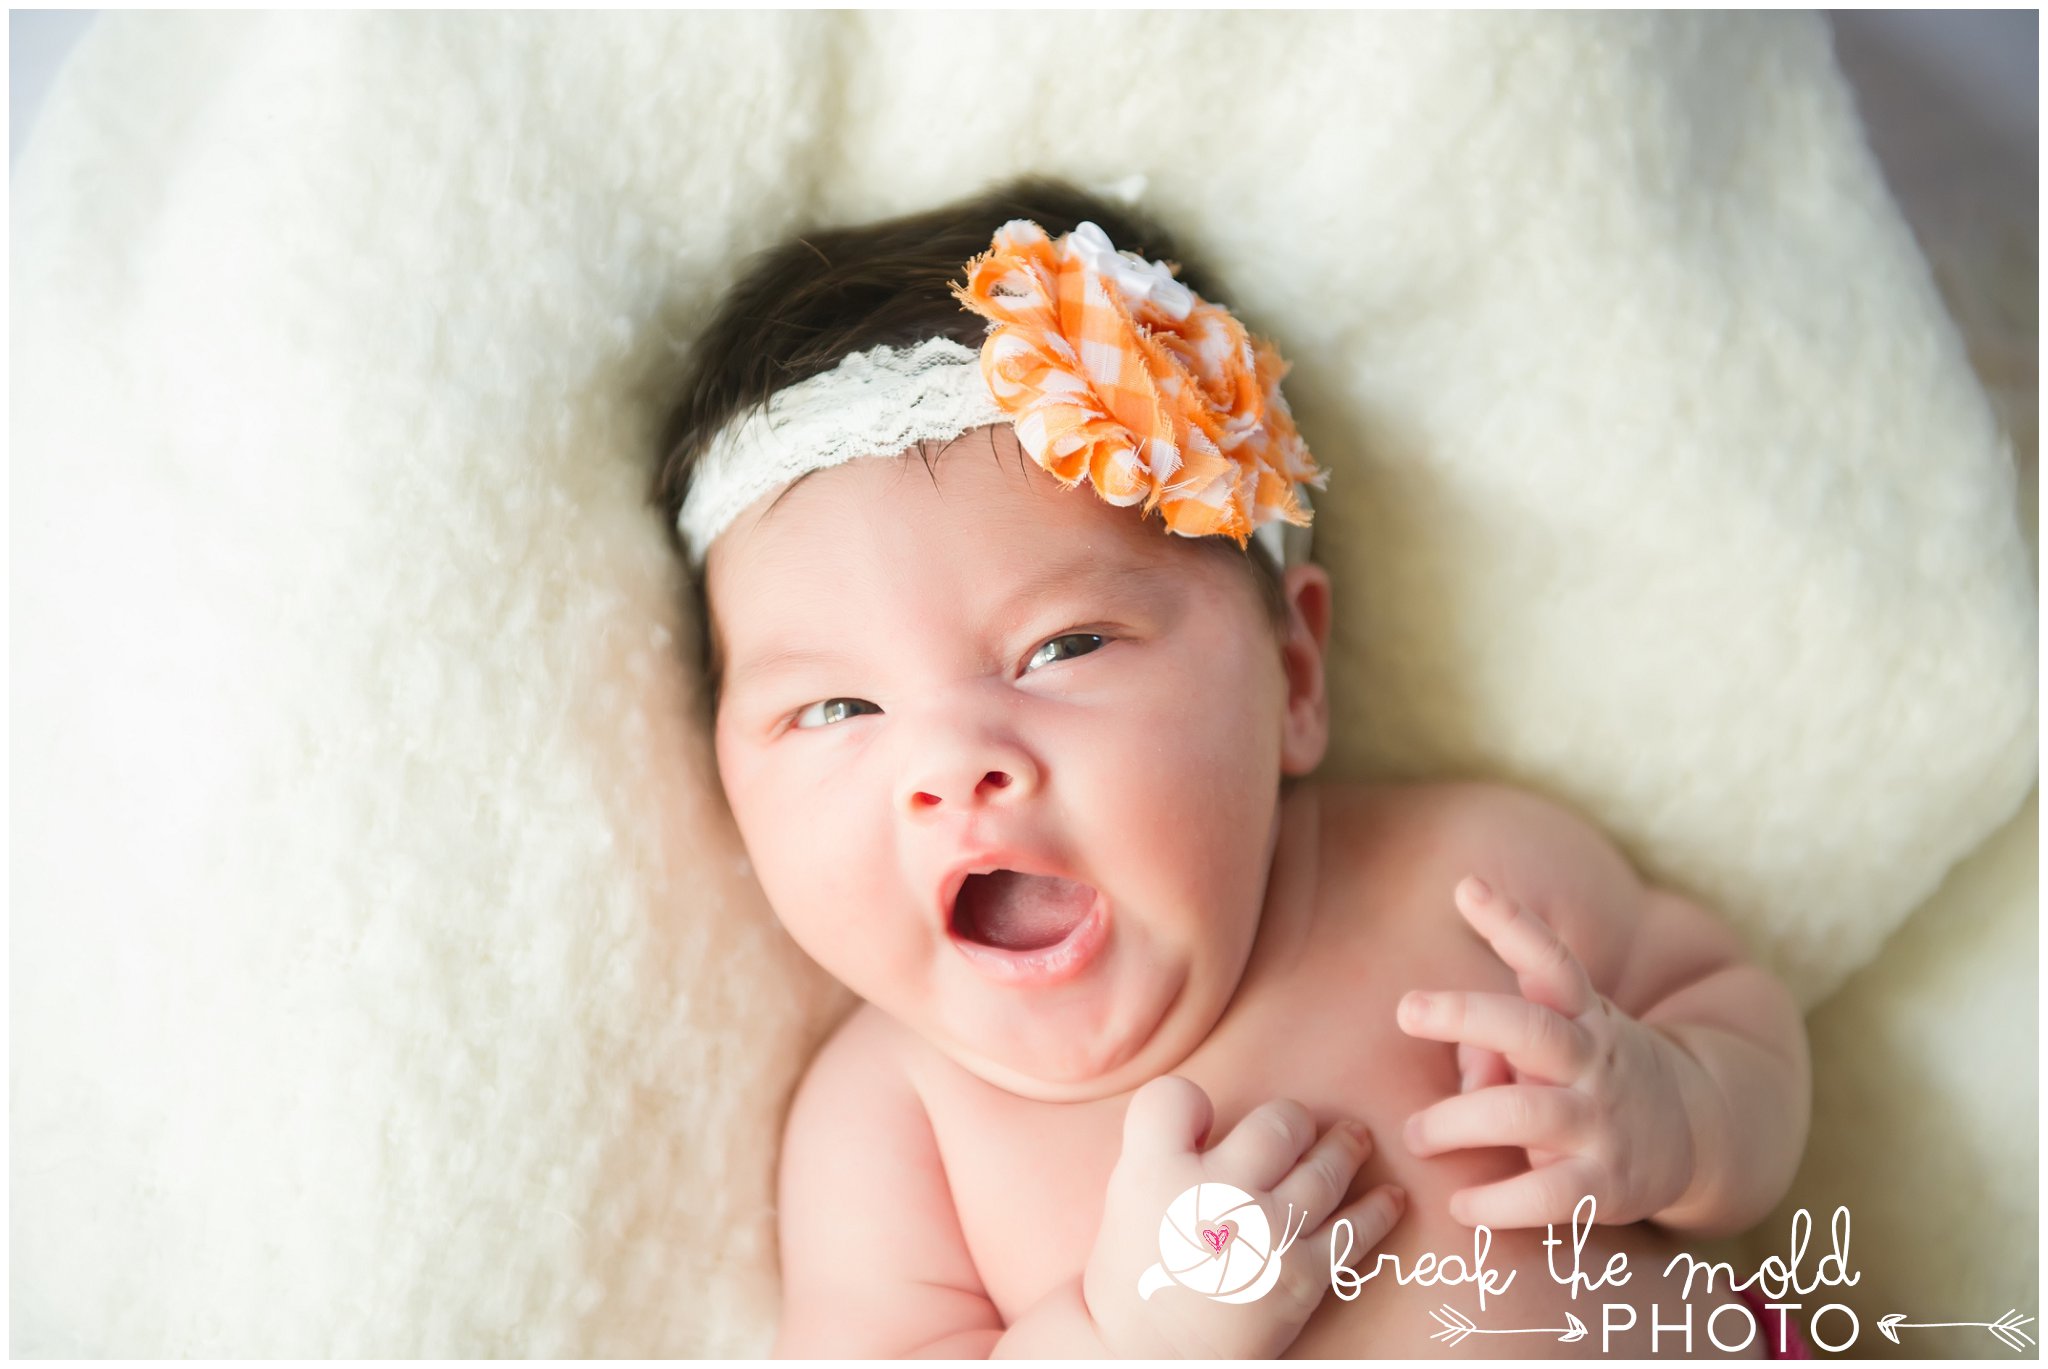 break-the-mold-photo-knoxville-newborn-photographer-creative-affordable-newborn-baby_2882.jpg